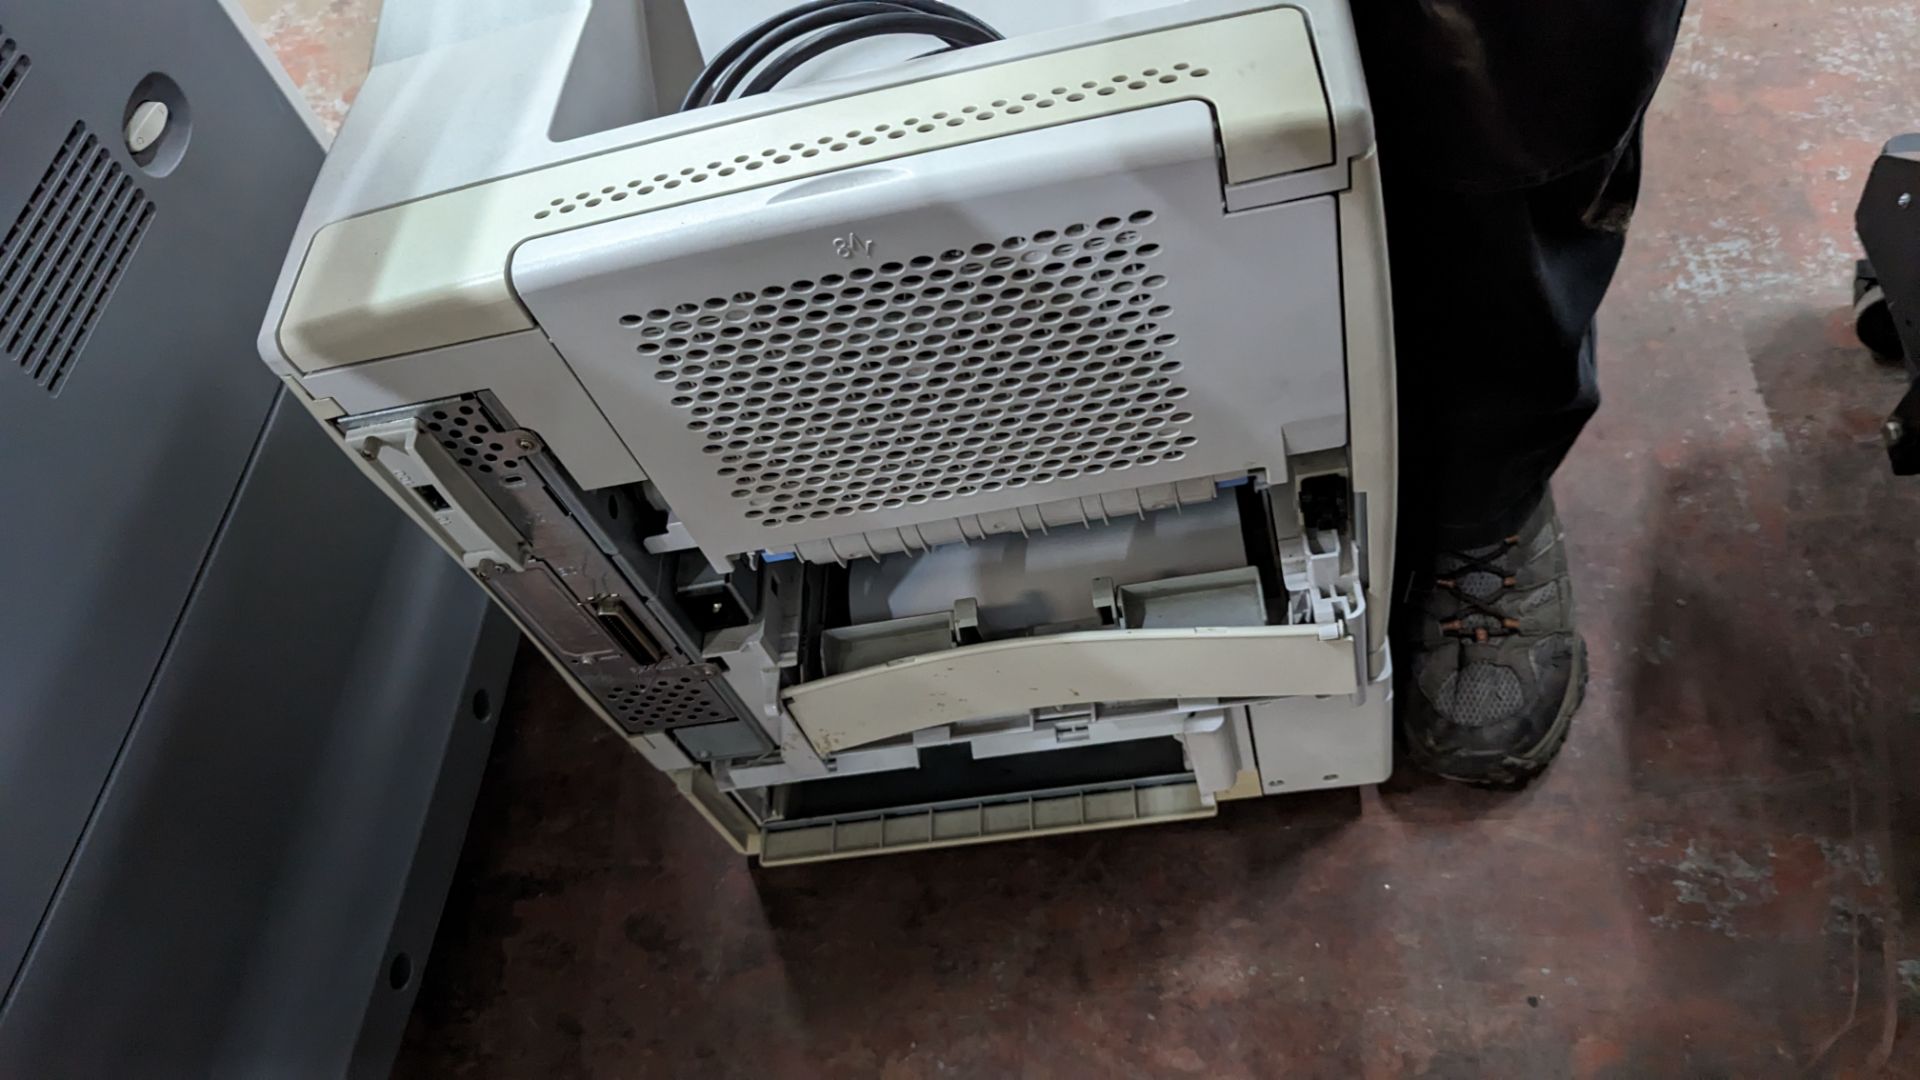 HP LaserJet 4200 printer incorporating deep paper cassette into base - Image 11 of 11